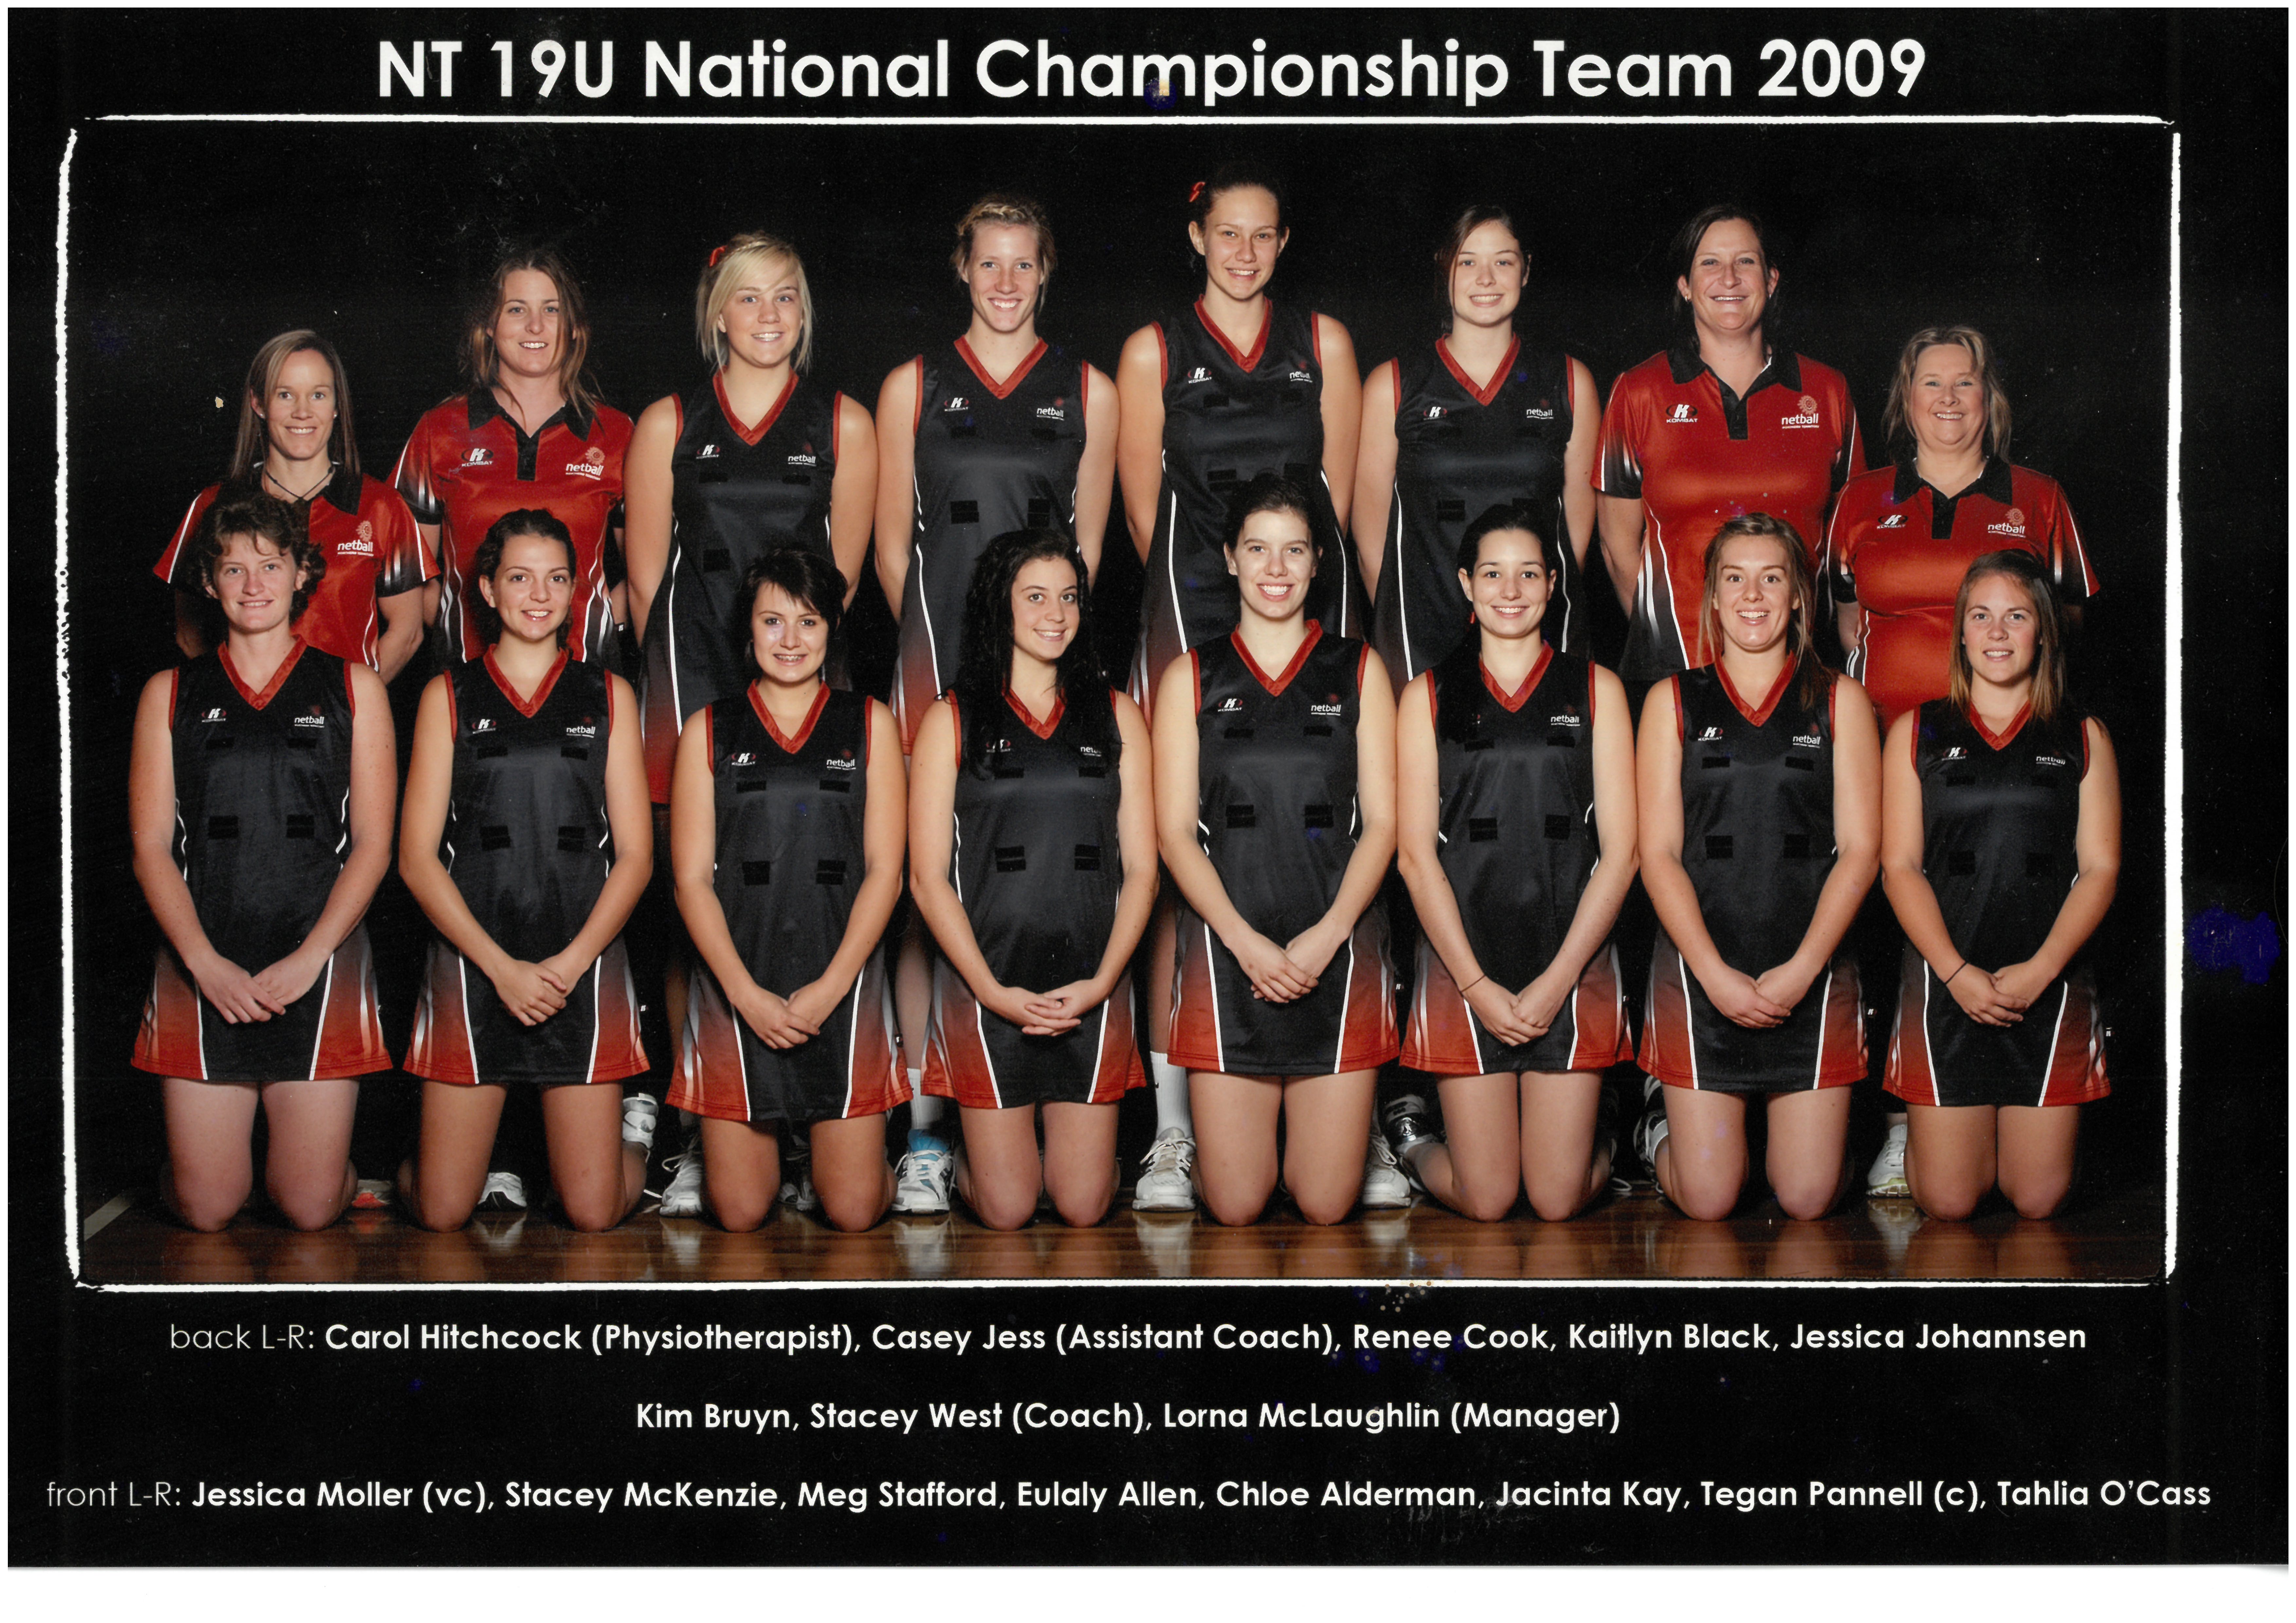 Netball NT State Team 2009 - 19U Team Photo with Names